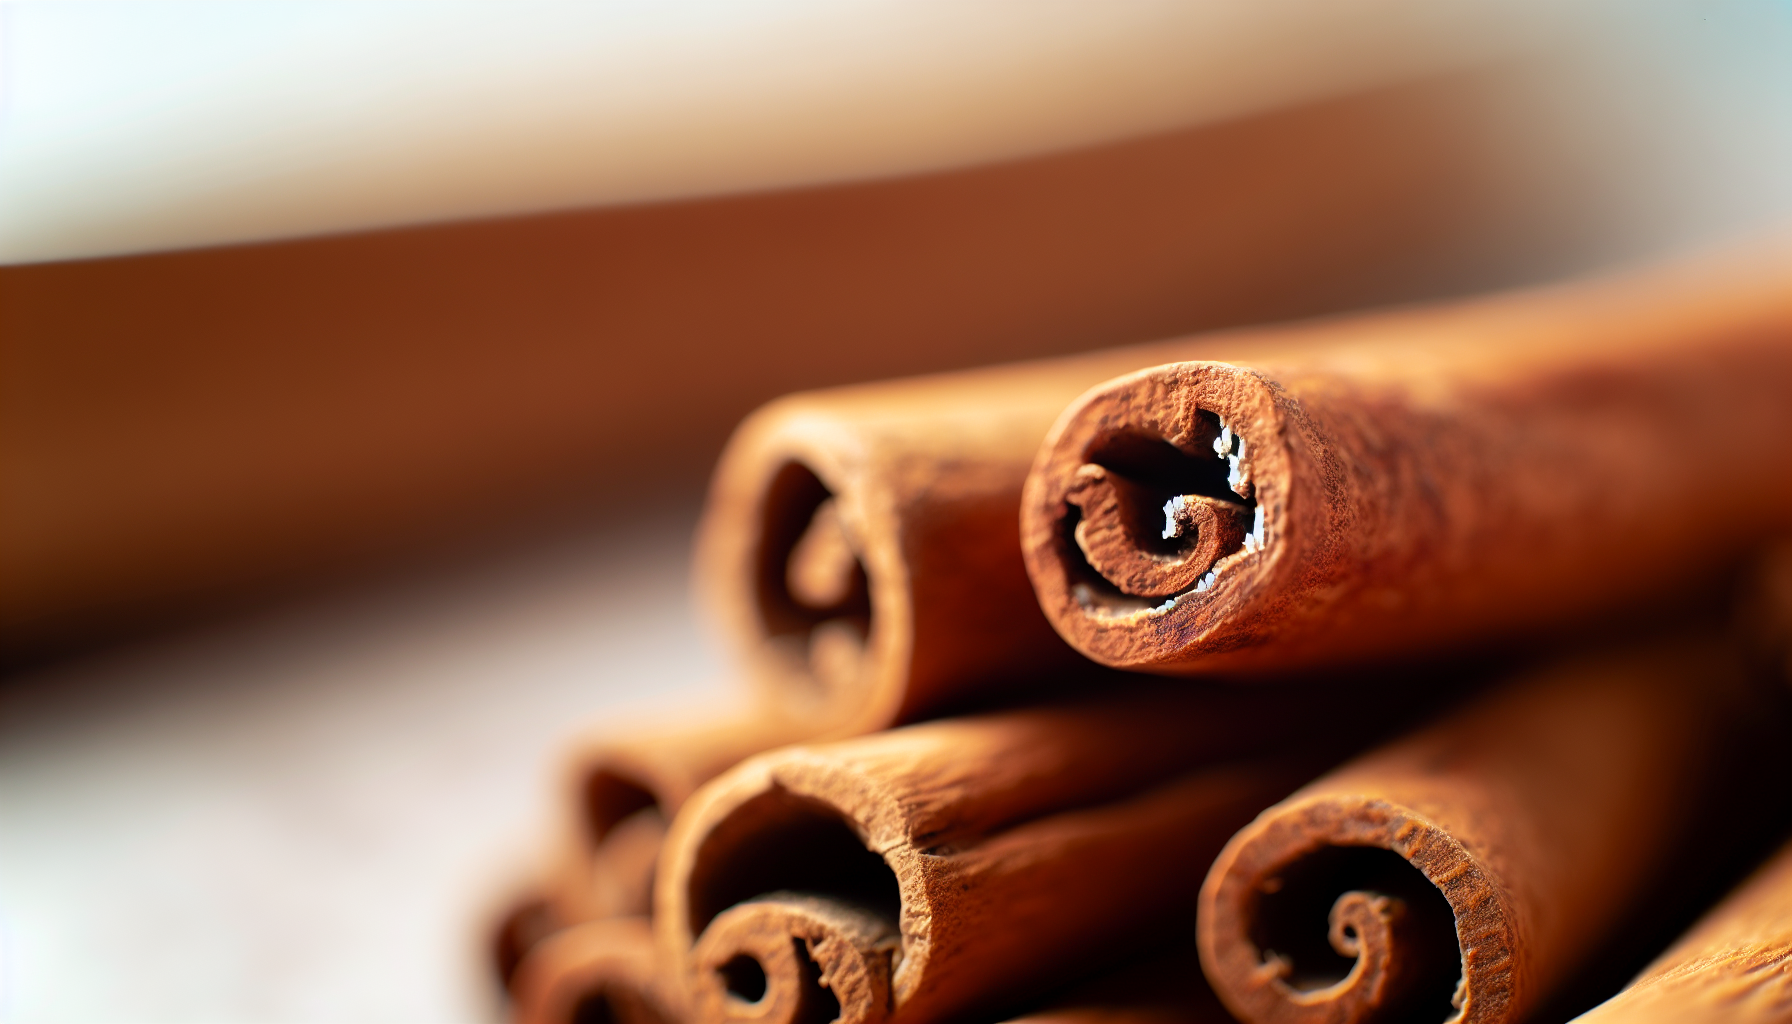 Photo of cinnamon sticks